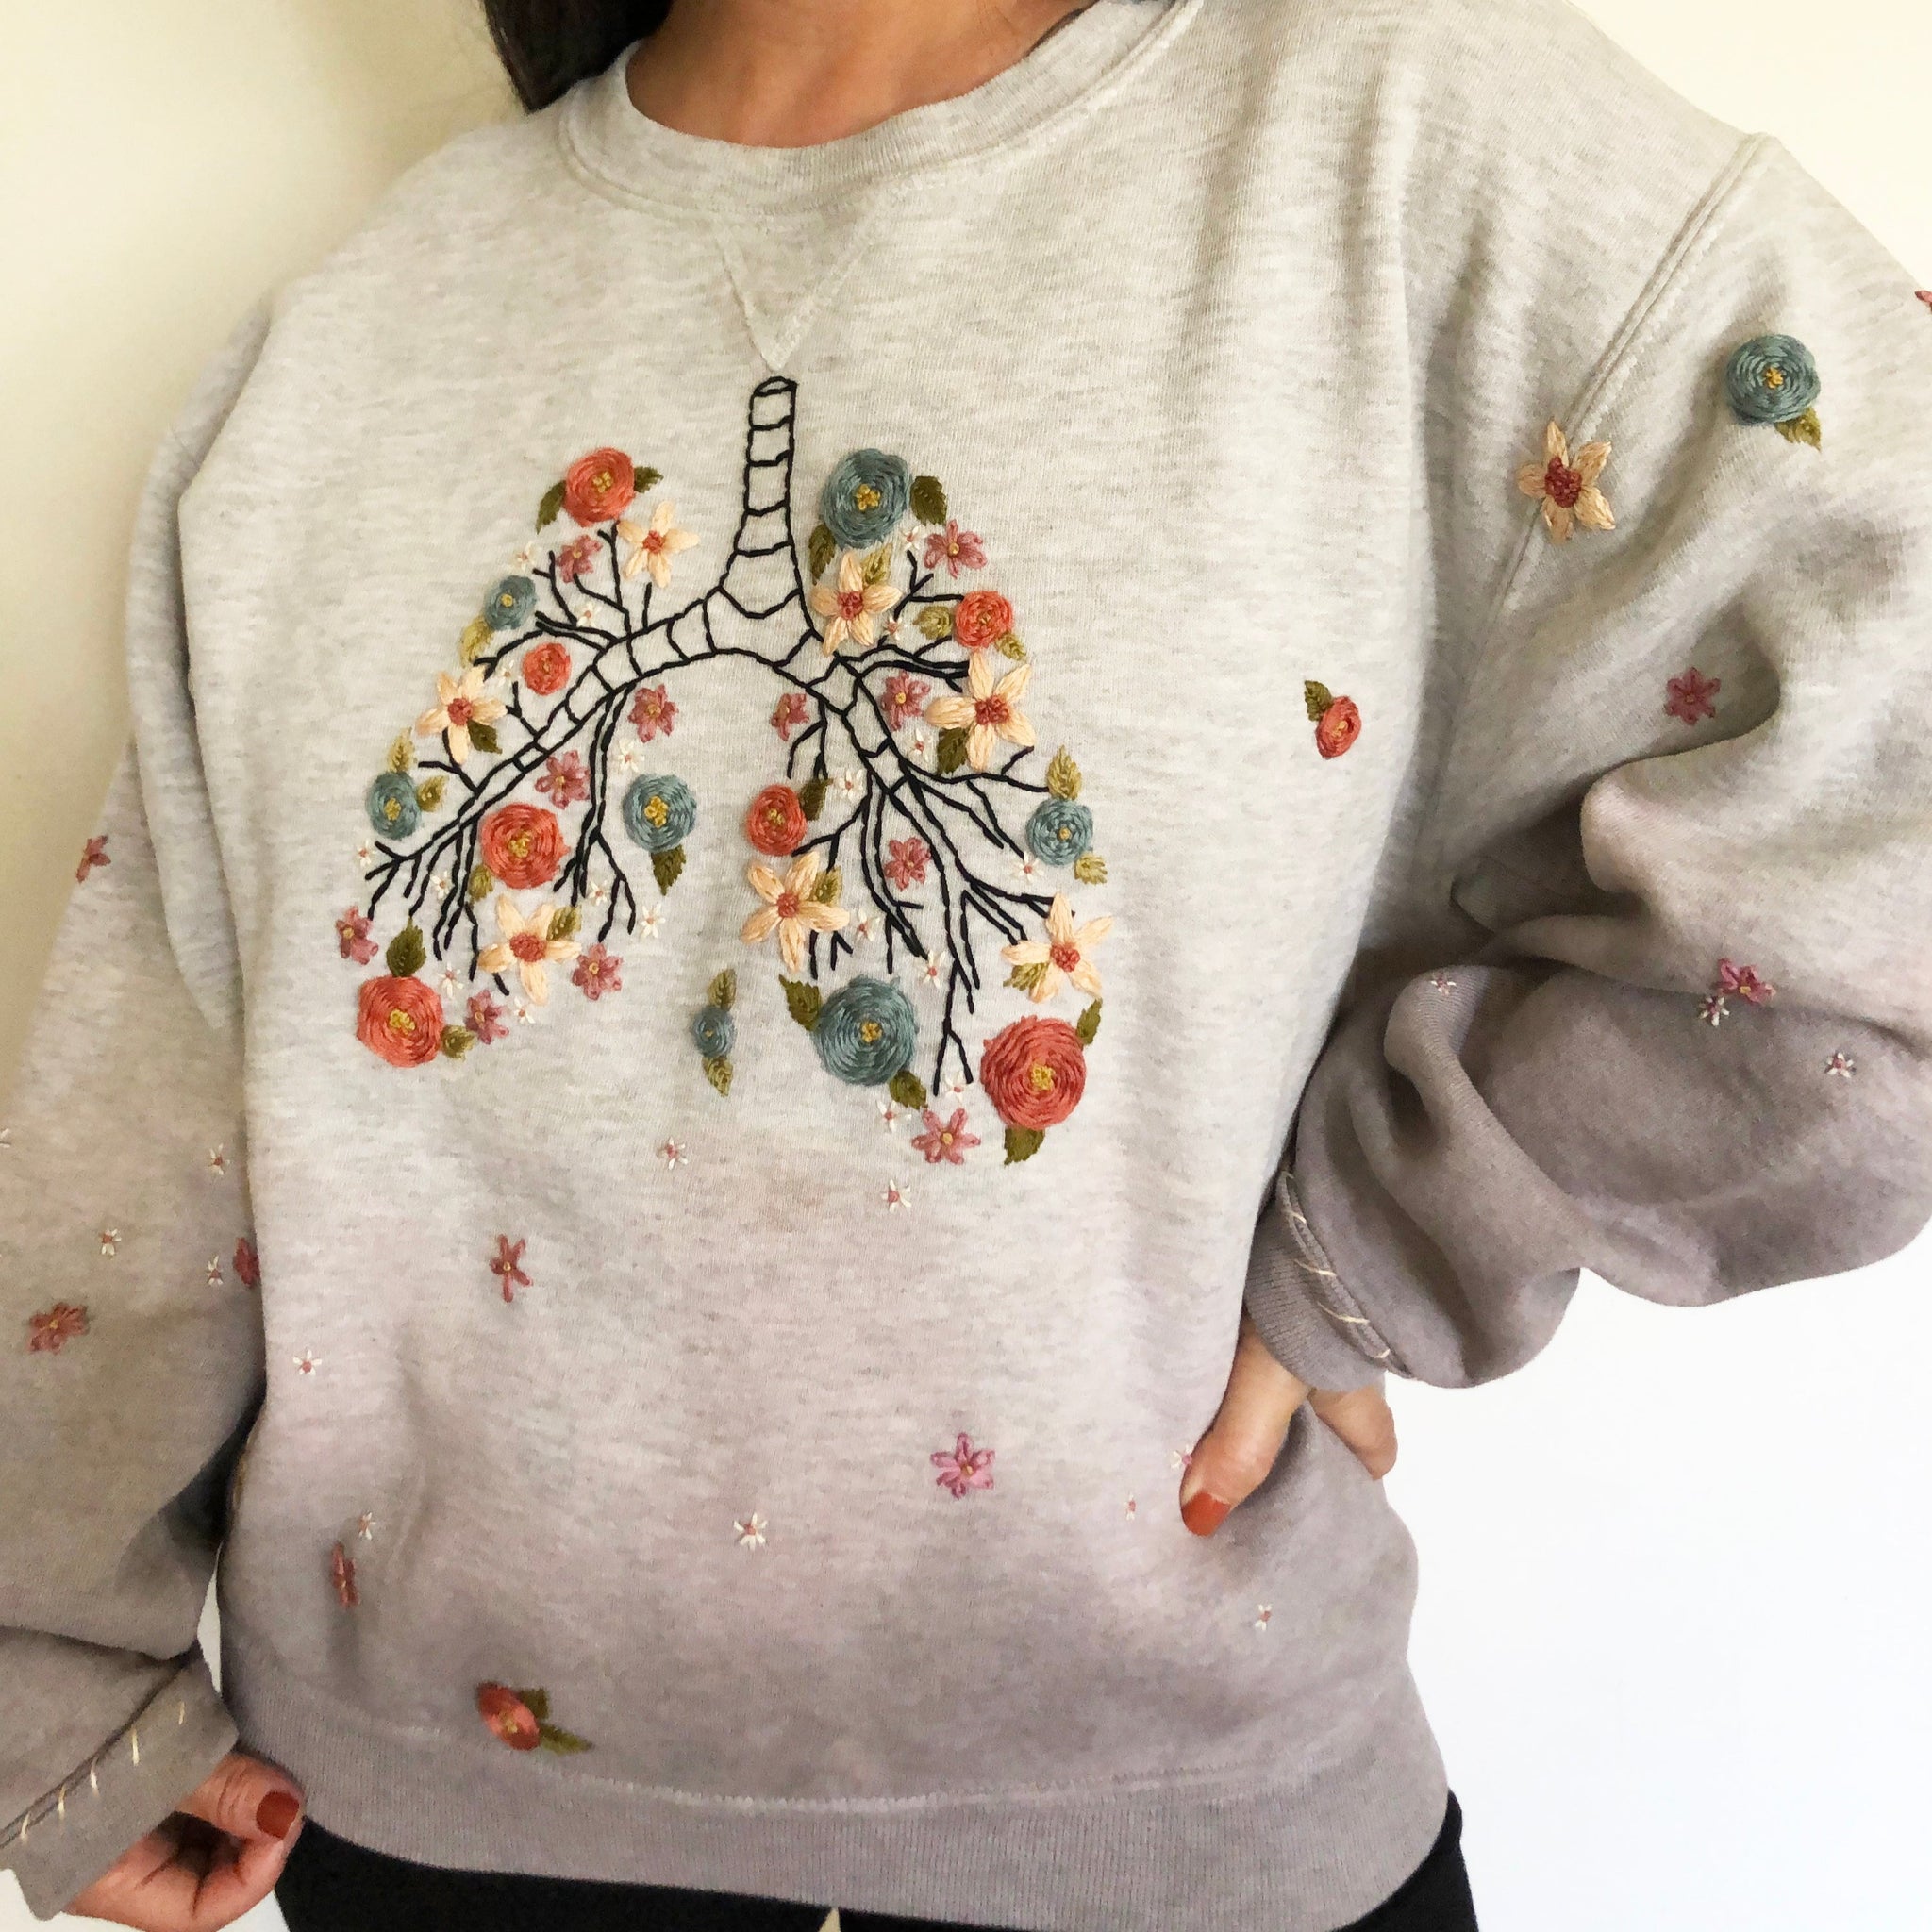 How I backed this sweatshirt! 🎅 #embroidery#fiberartist